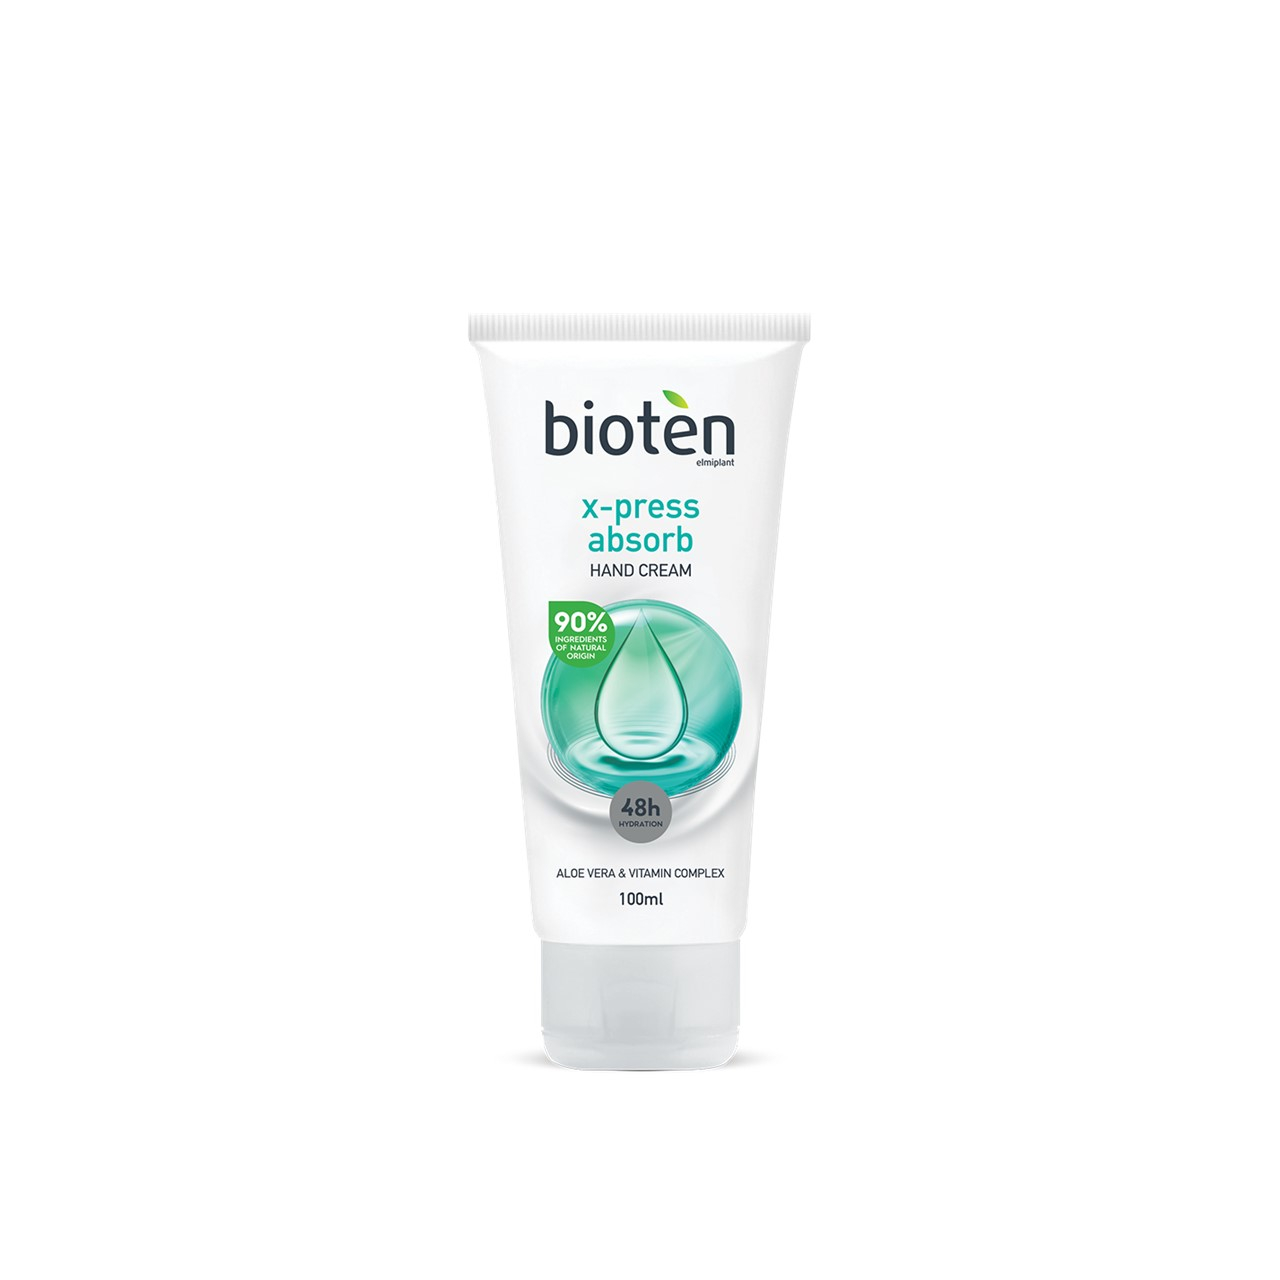 bioten Xpress Absorb Hand Cream 100ml (3.38fl oz)